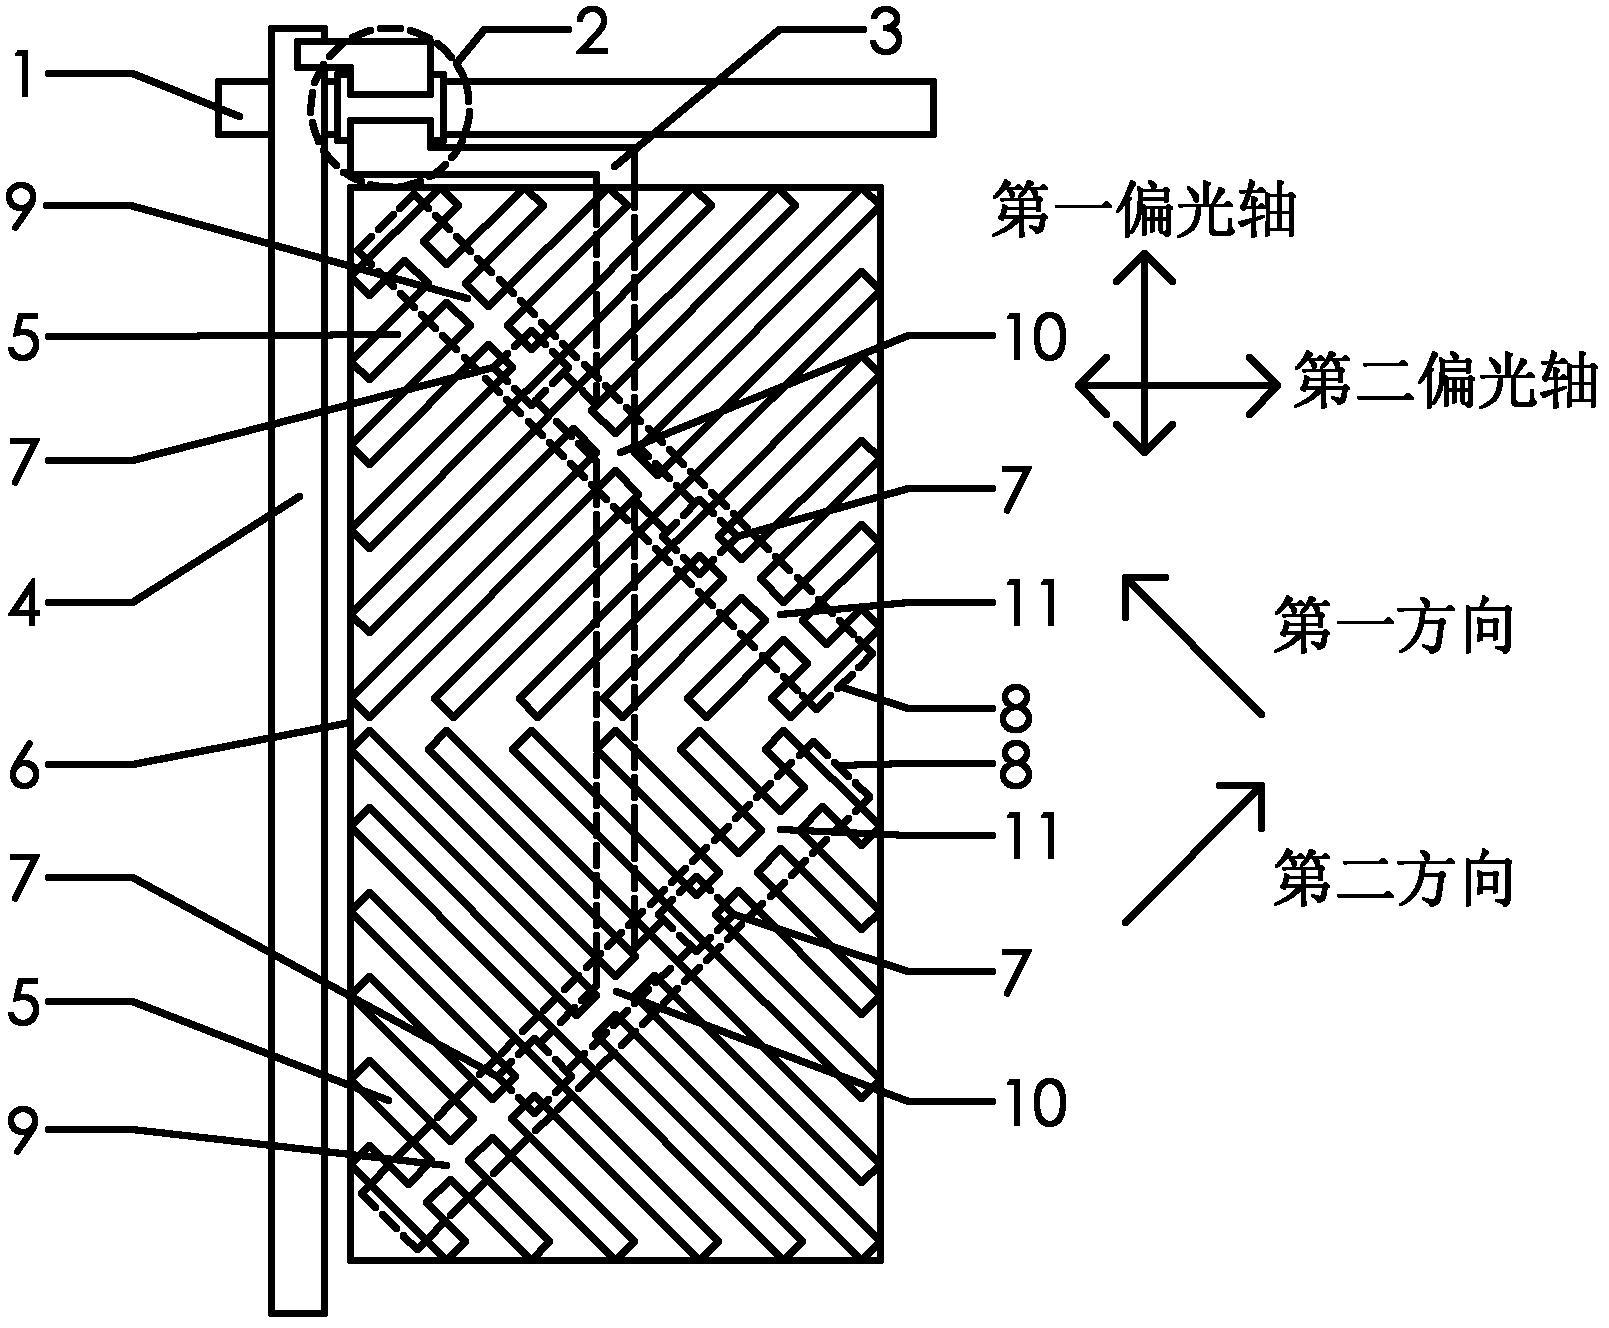 Pixel unit and LCD (liquid crystal display) panel